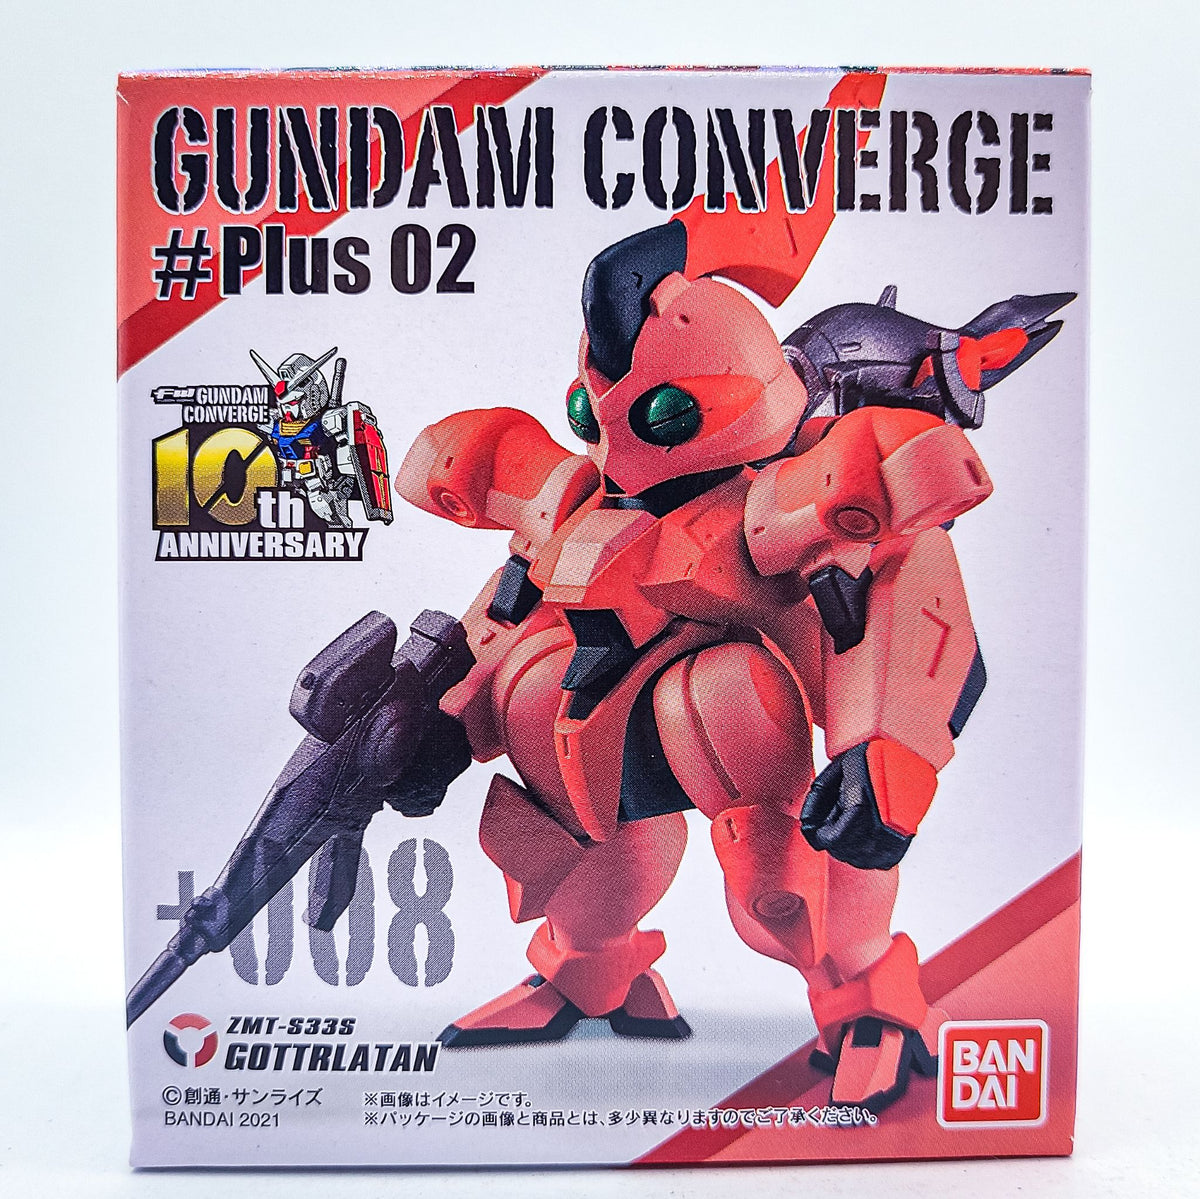 Gundam Converge PLUS +008 Gottrlatan by Bandai - 1